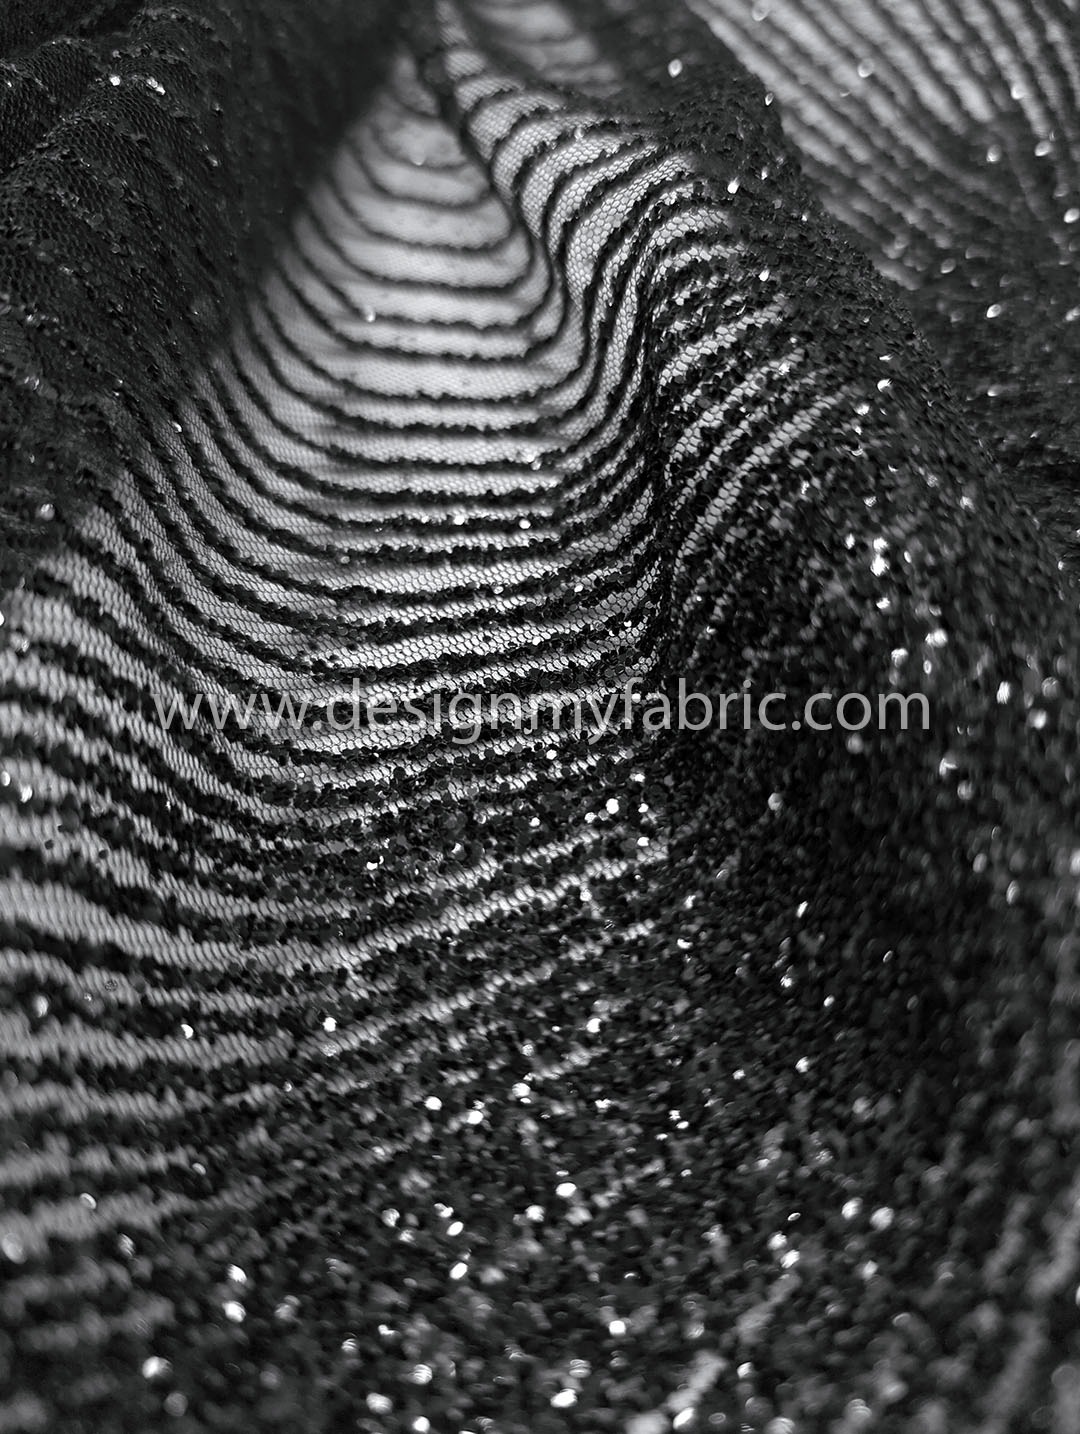 Black net glitter fabric #91584 - Design My Fabric